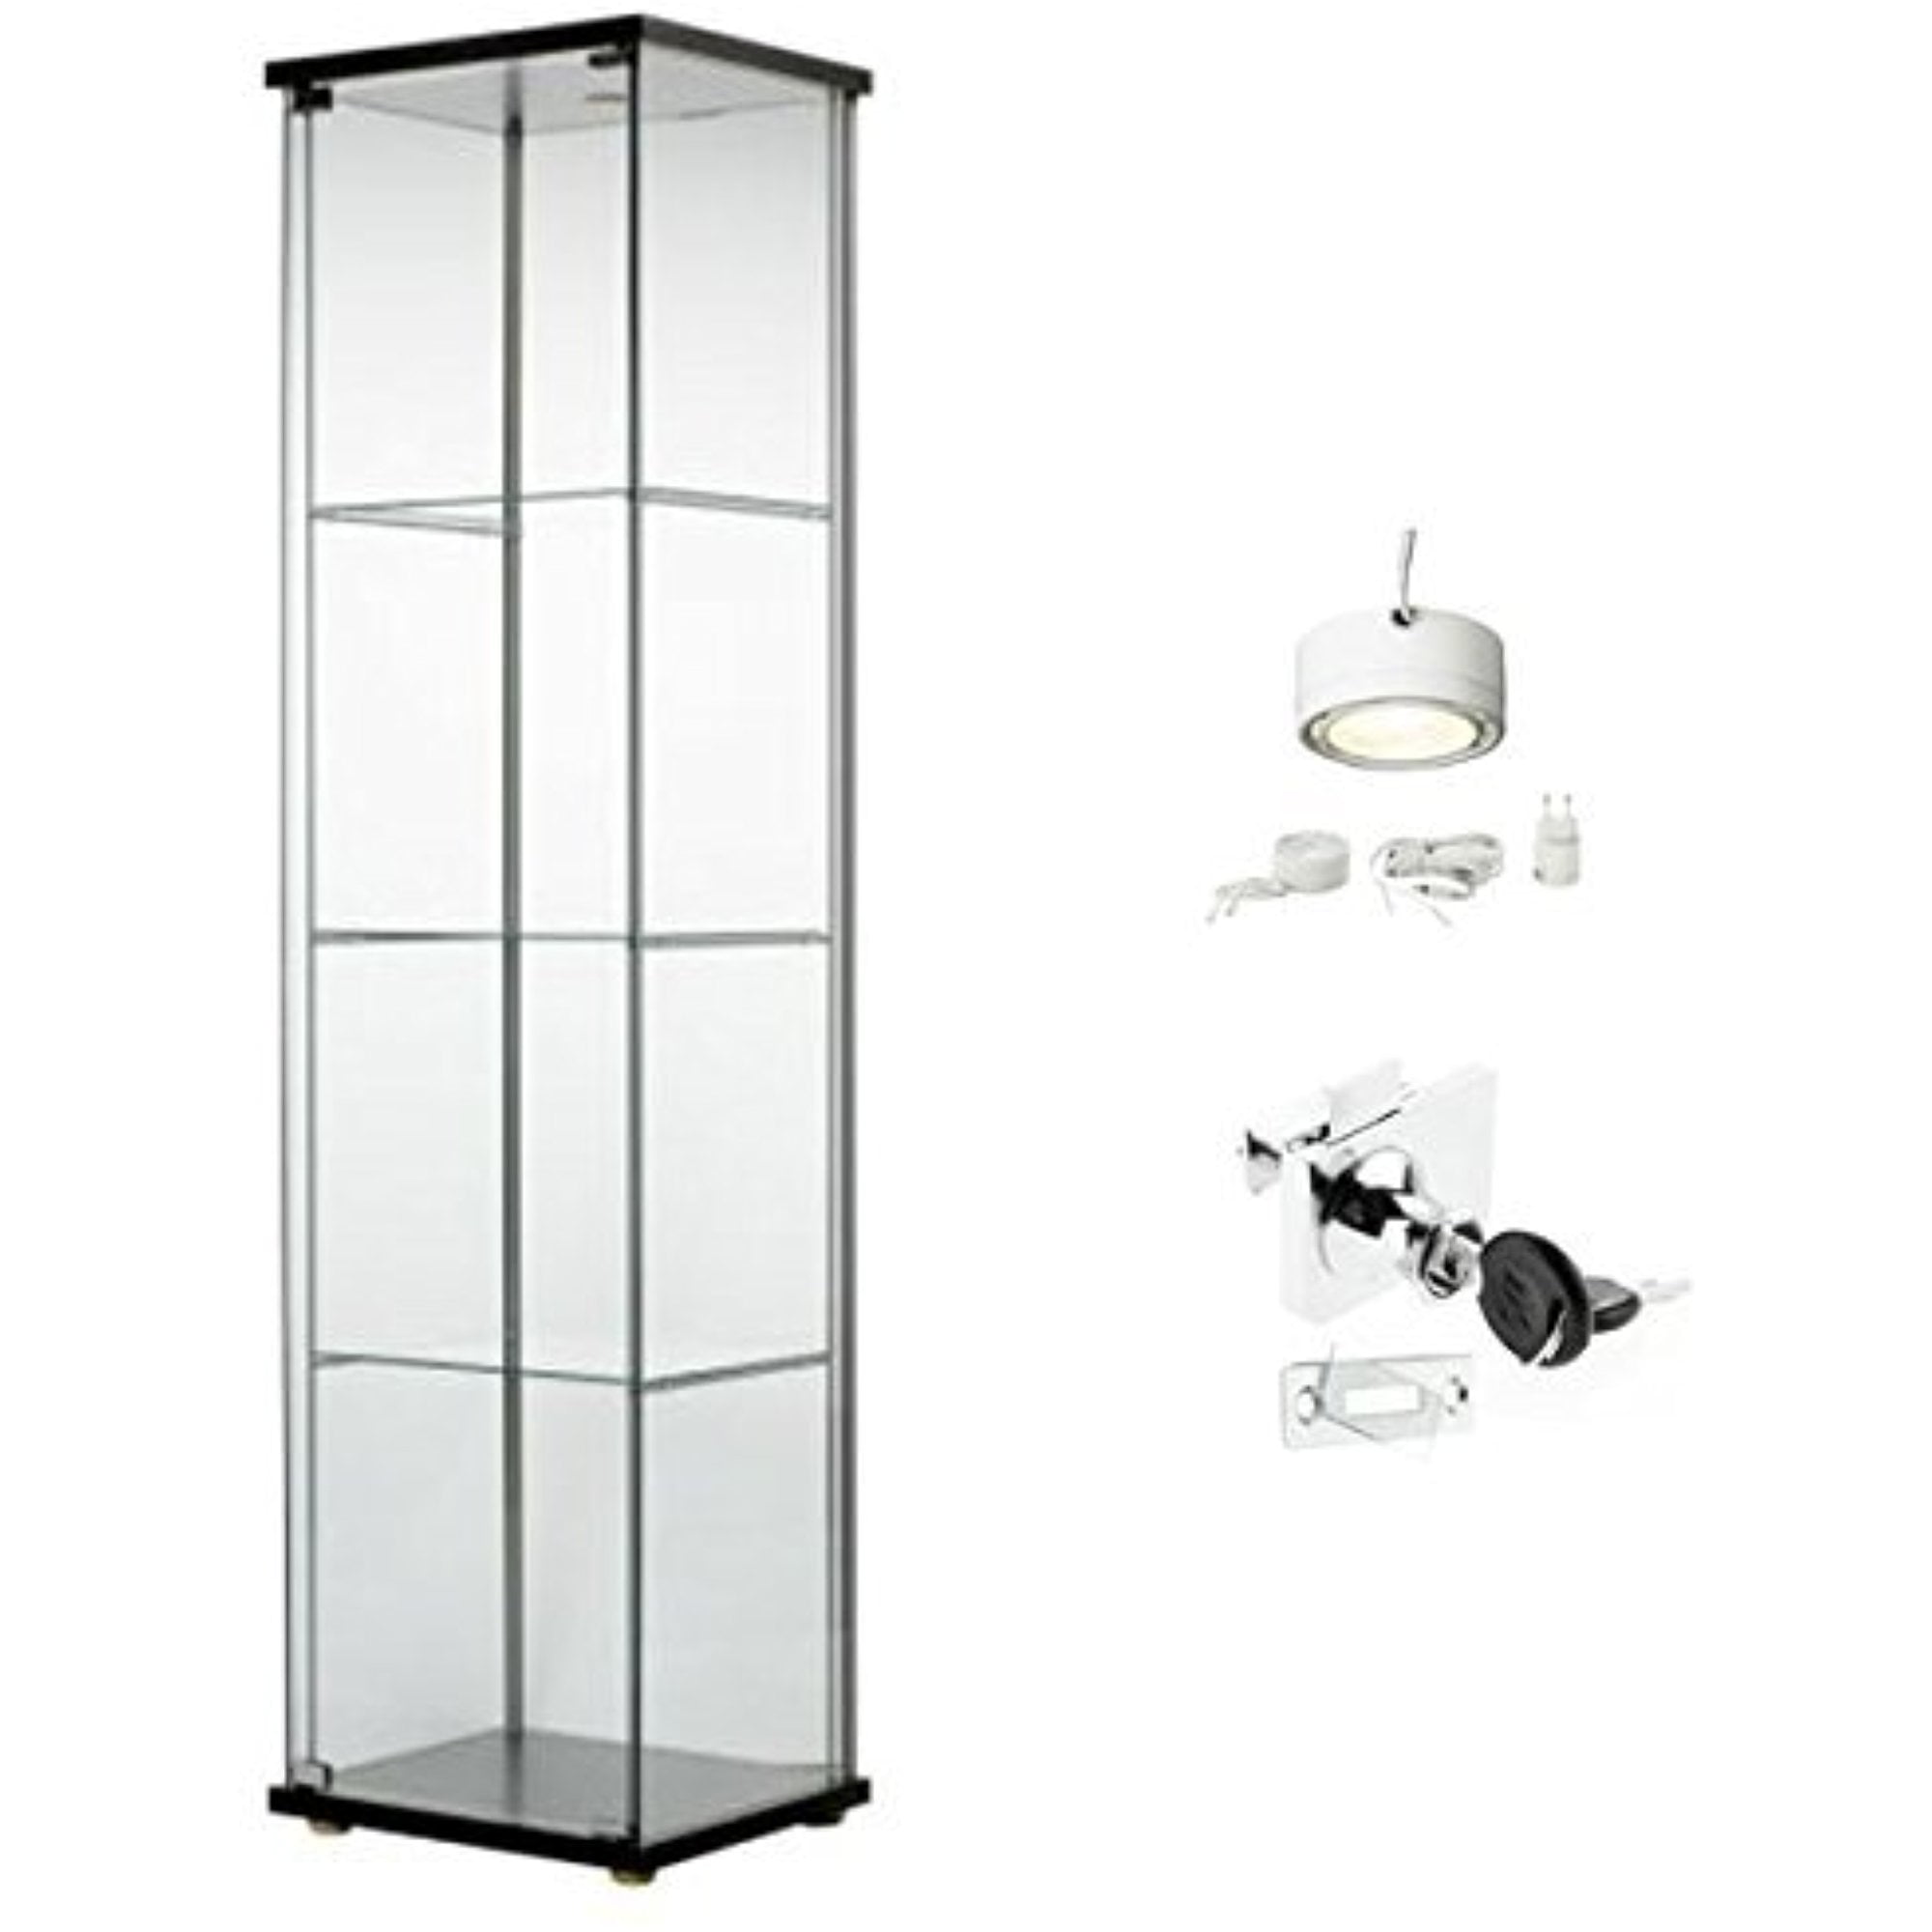 Ikea Detolf Glass Curio Display Cabinet Black Lockable Light And Lock